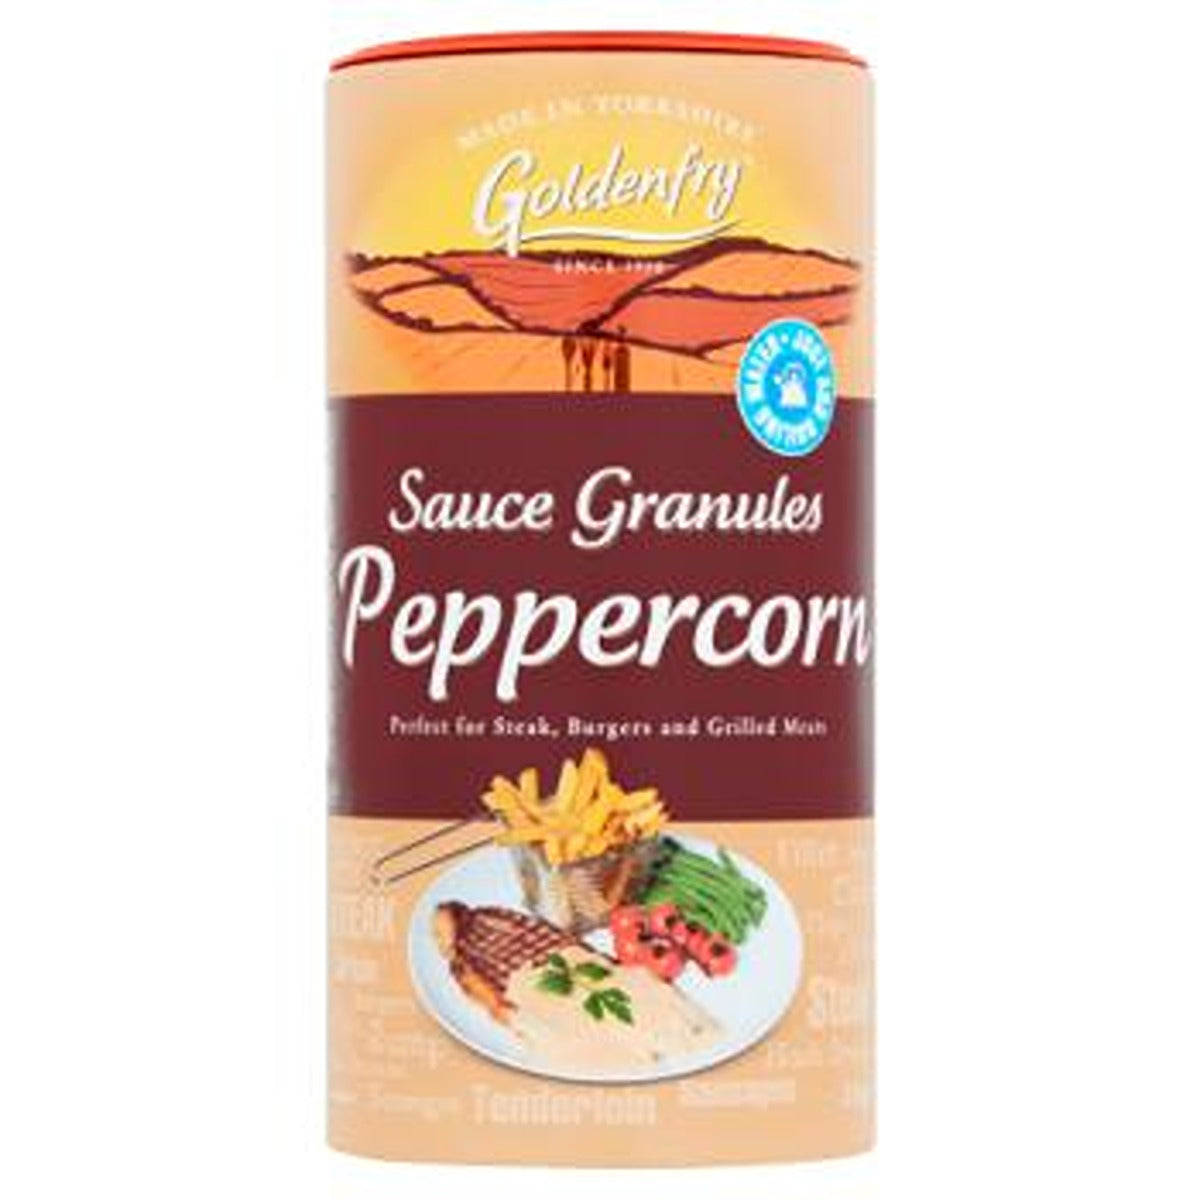 Goldenfry - Peppercorn Sauce Granules - 230g - Continental Food Store